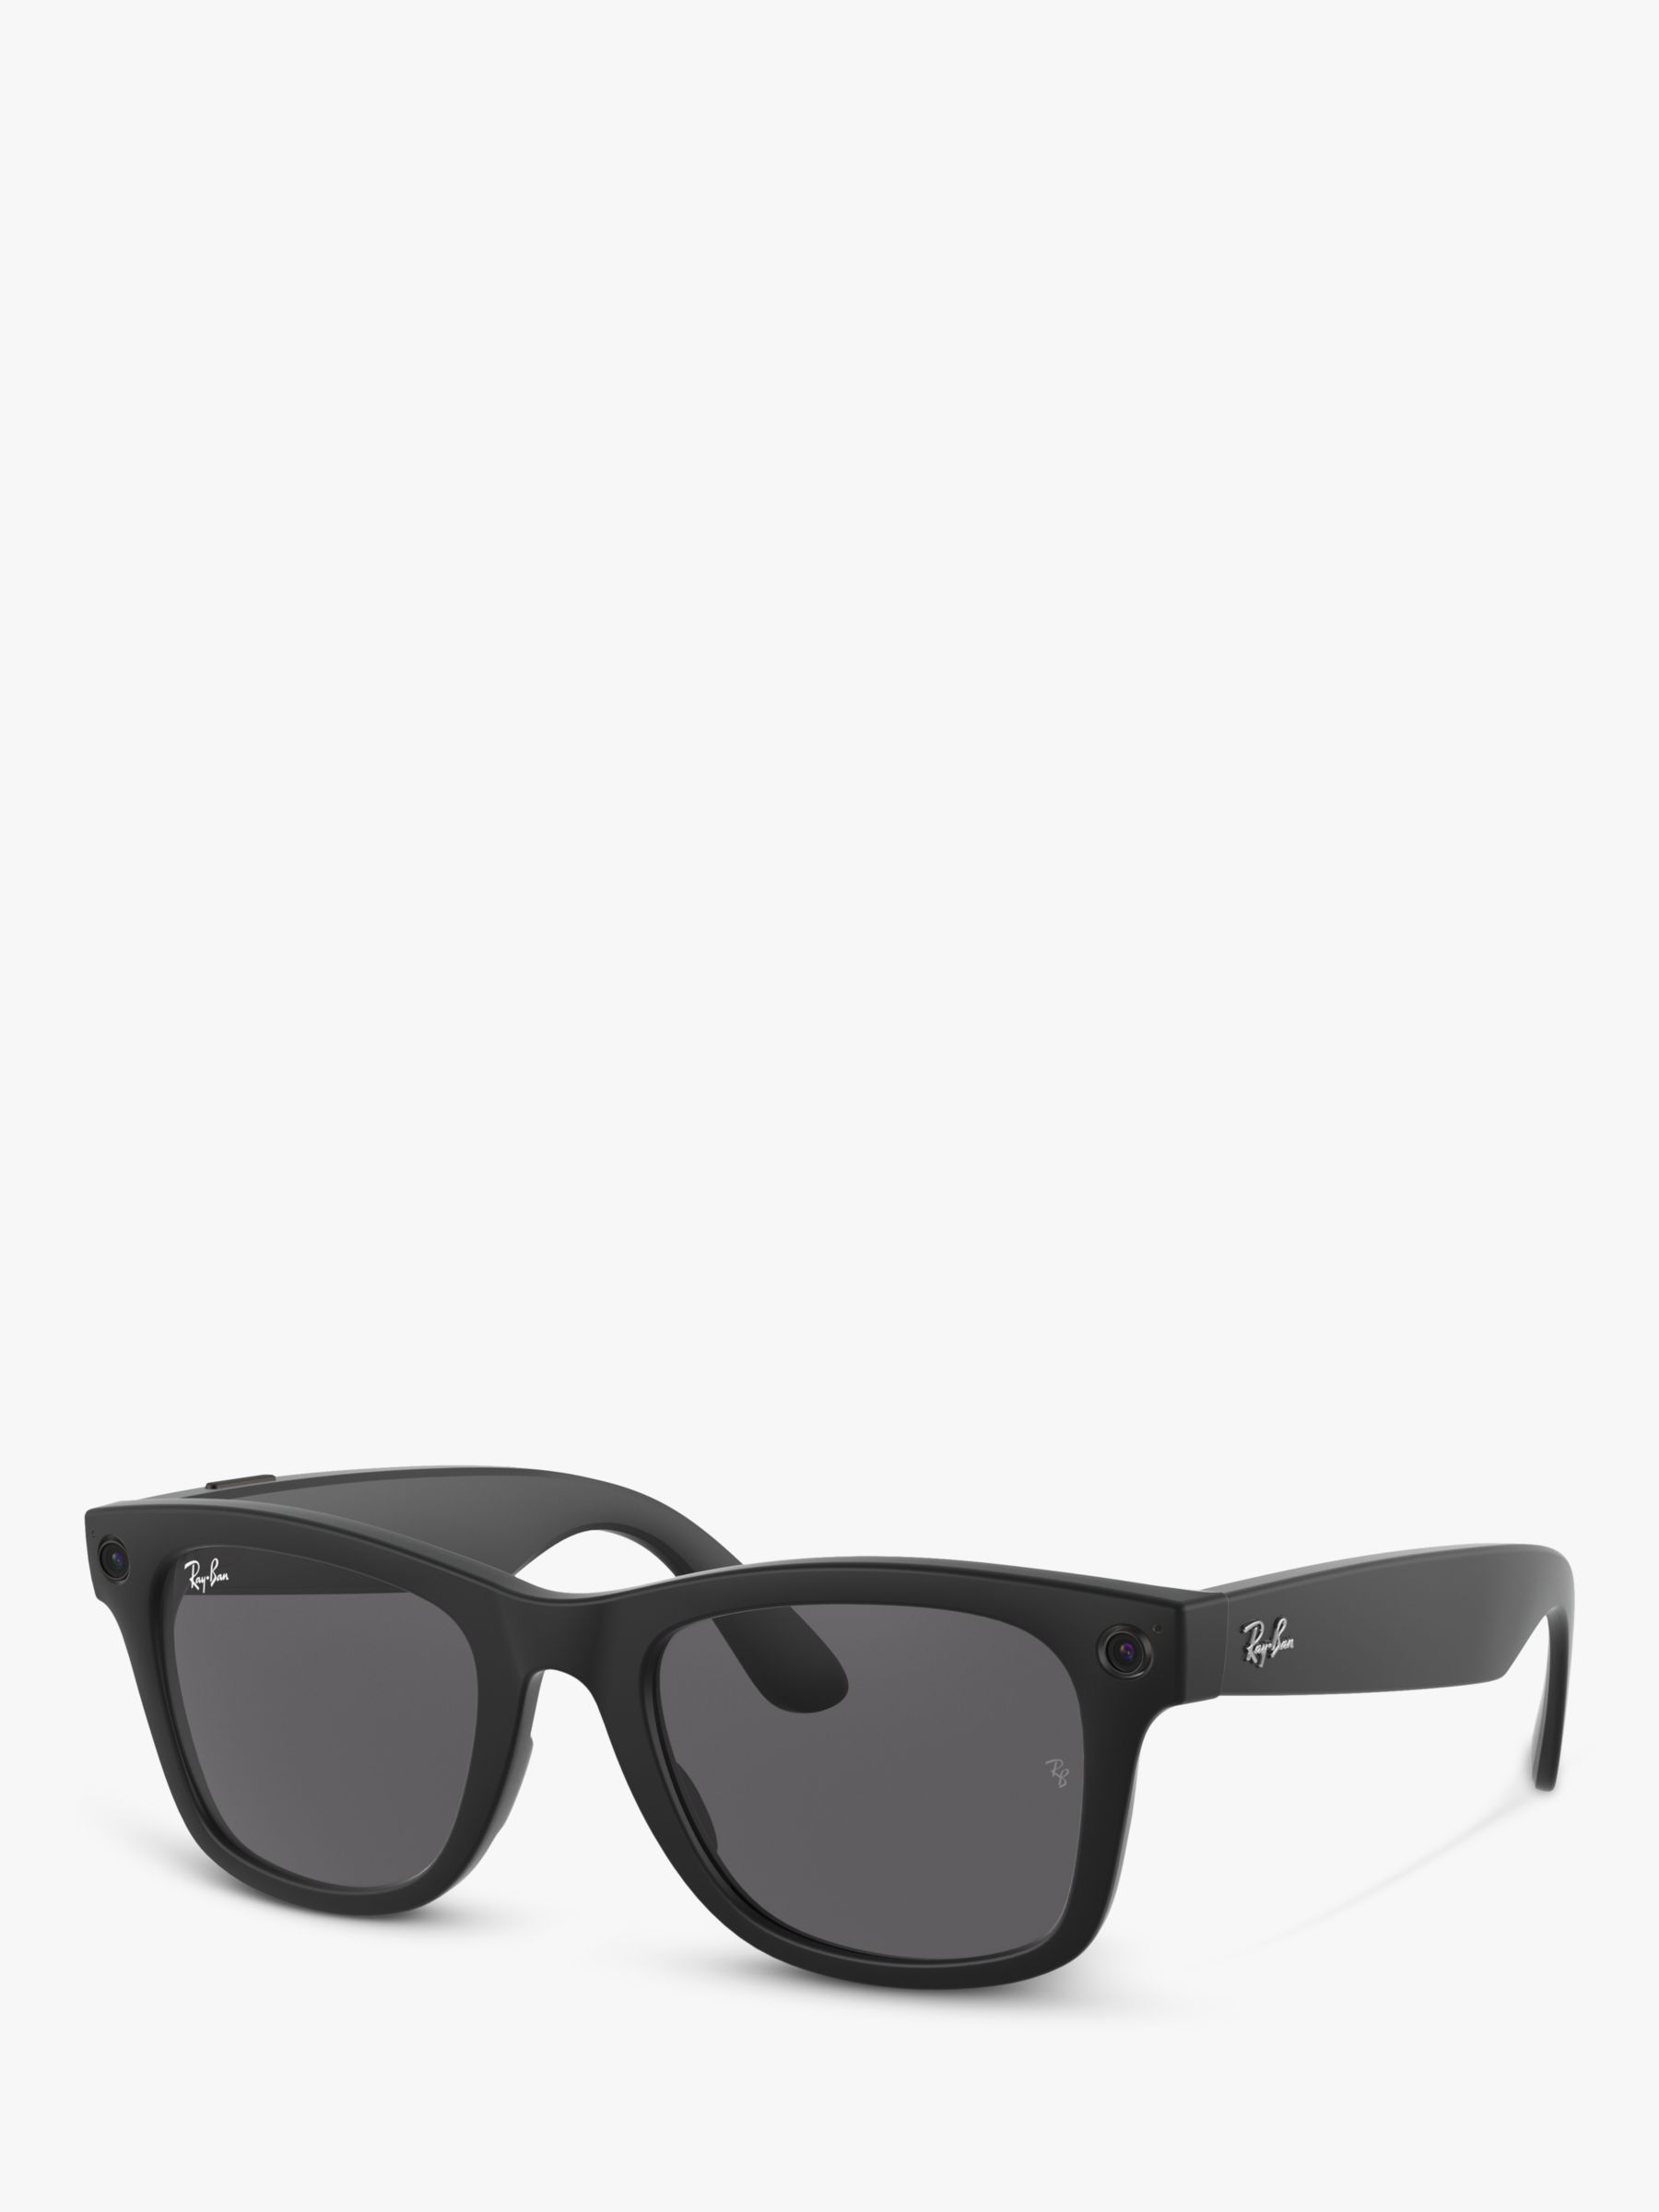 Ray-Ban Stories Wayfarer Large Smart Sunglasses, Matte Black/Grey at John  Lewis & Partners